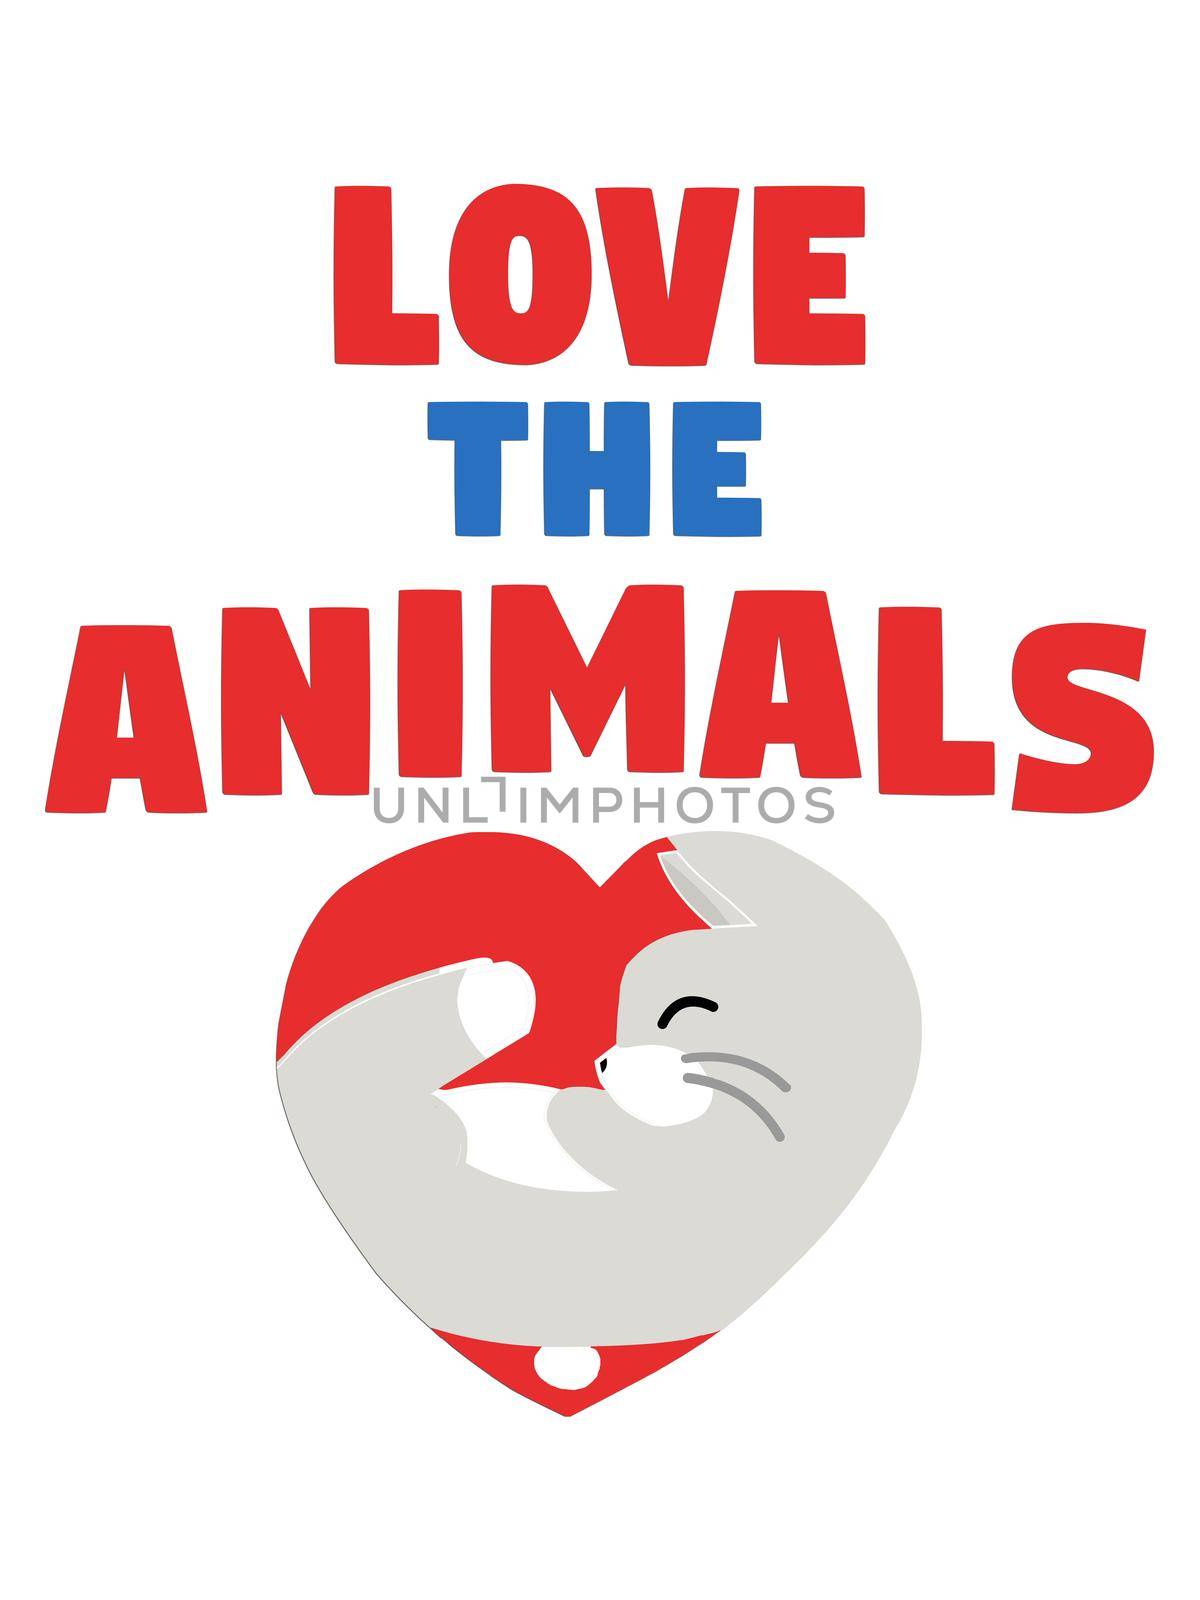 Love the animals